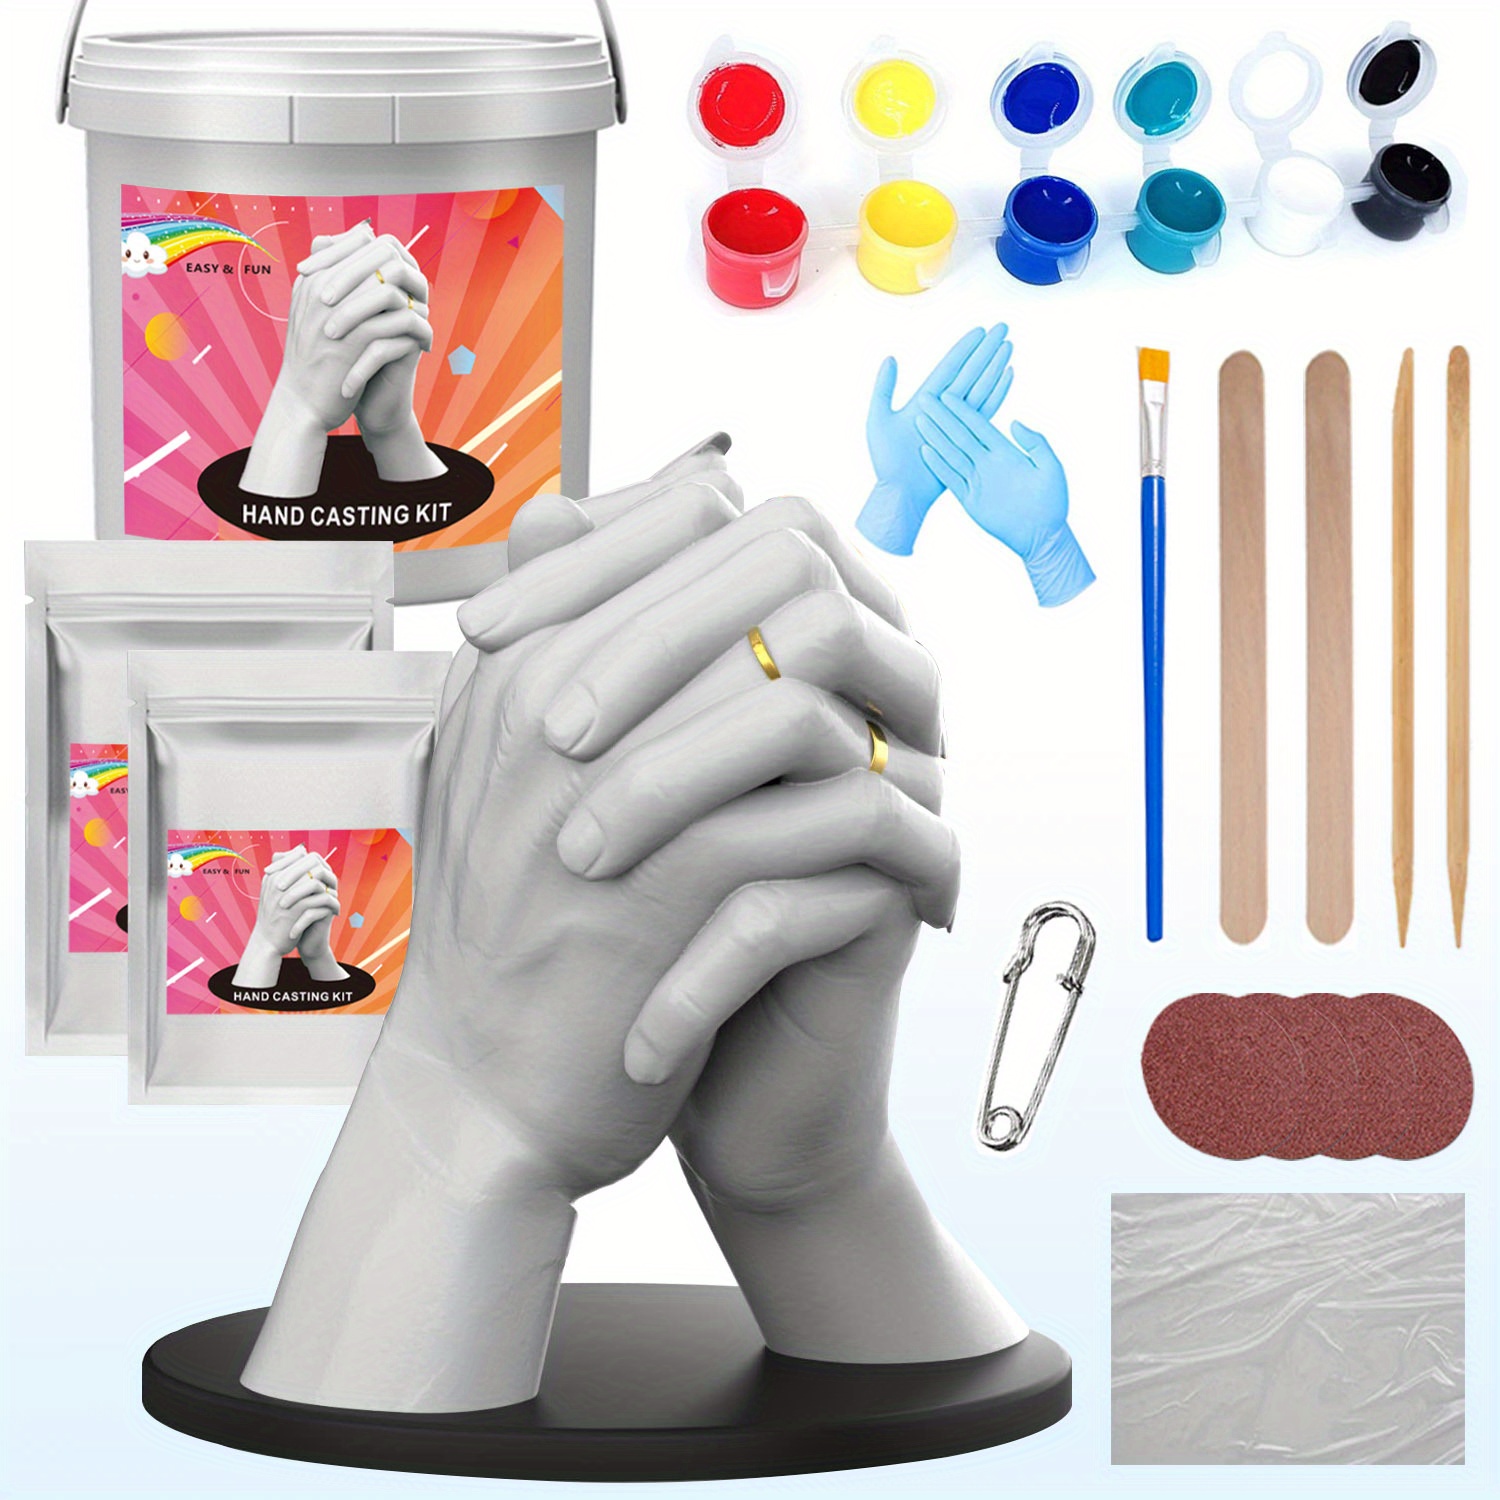 Kit de fundición de manos para parejas, molde 3D para manos, molde